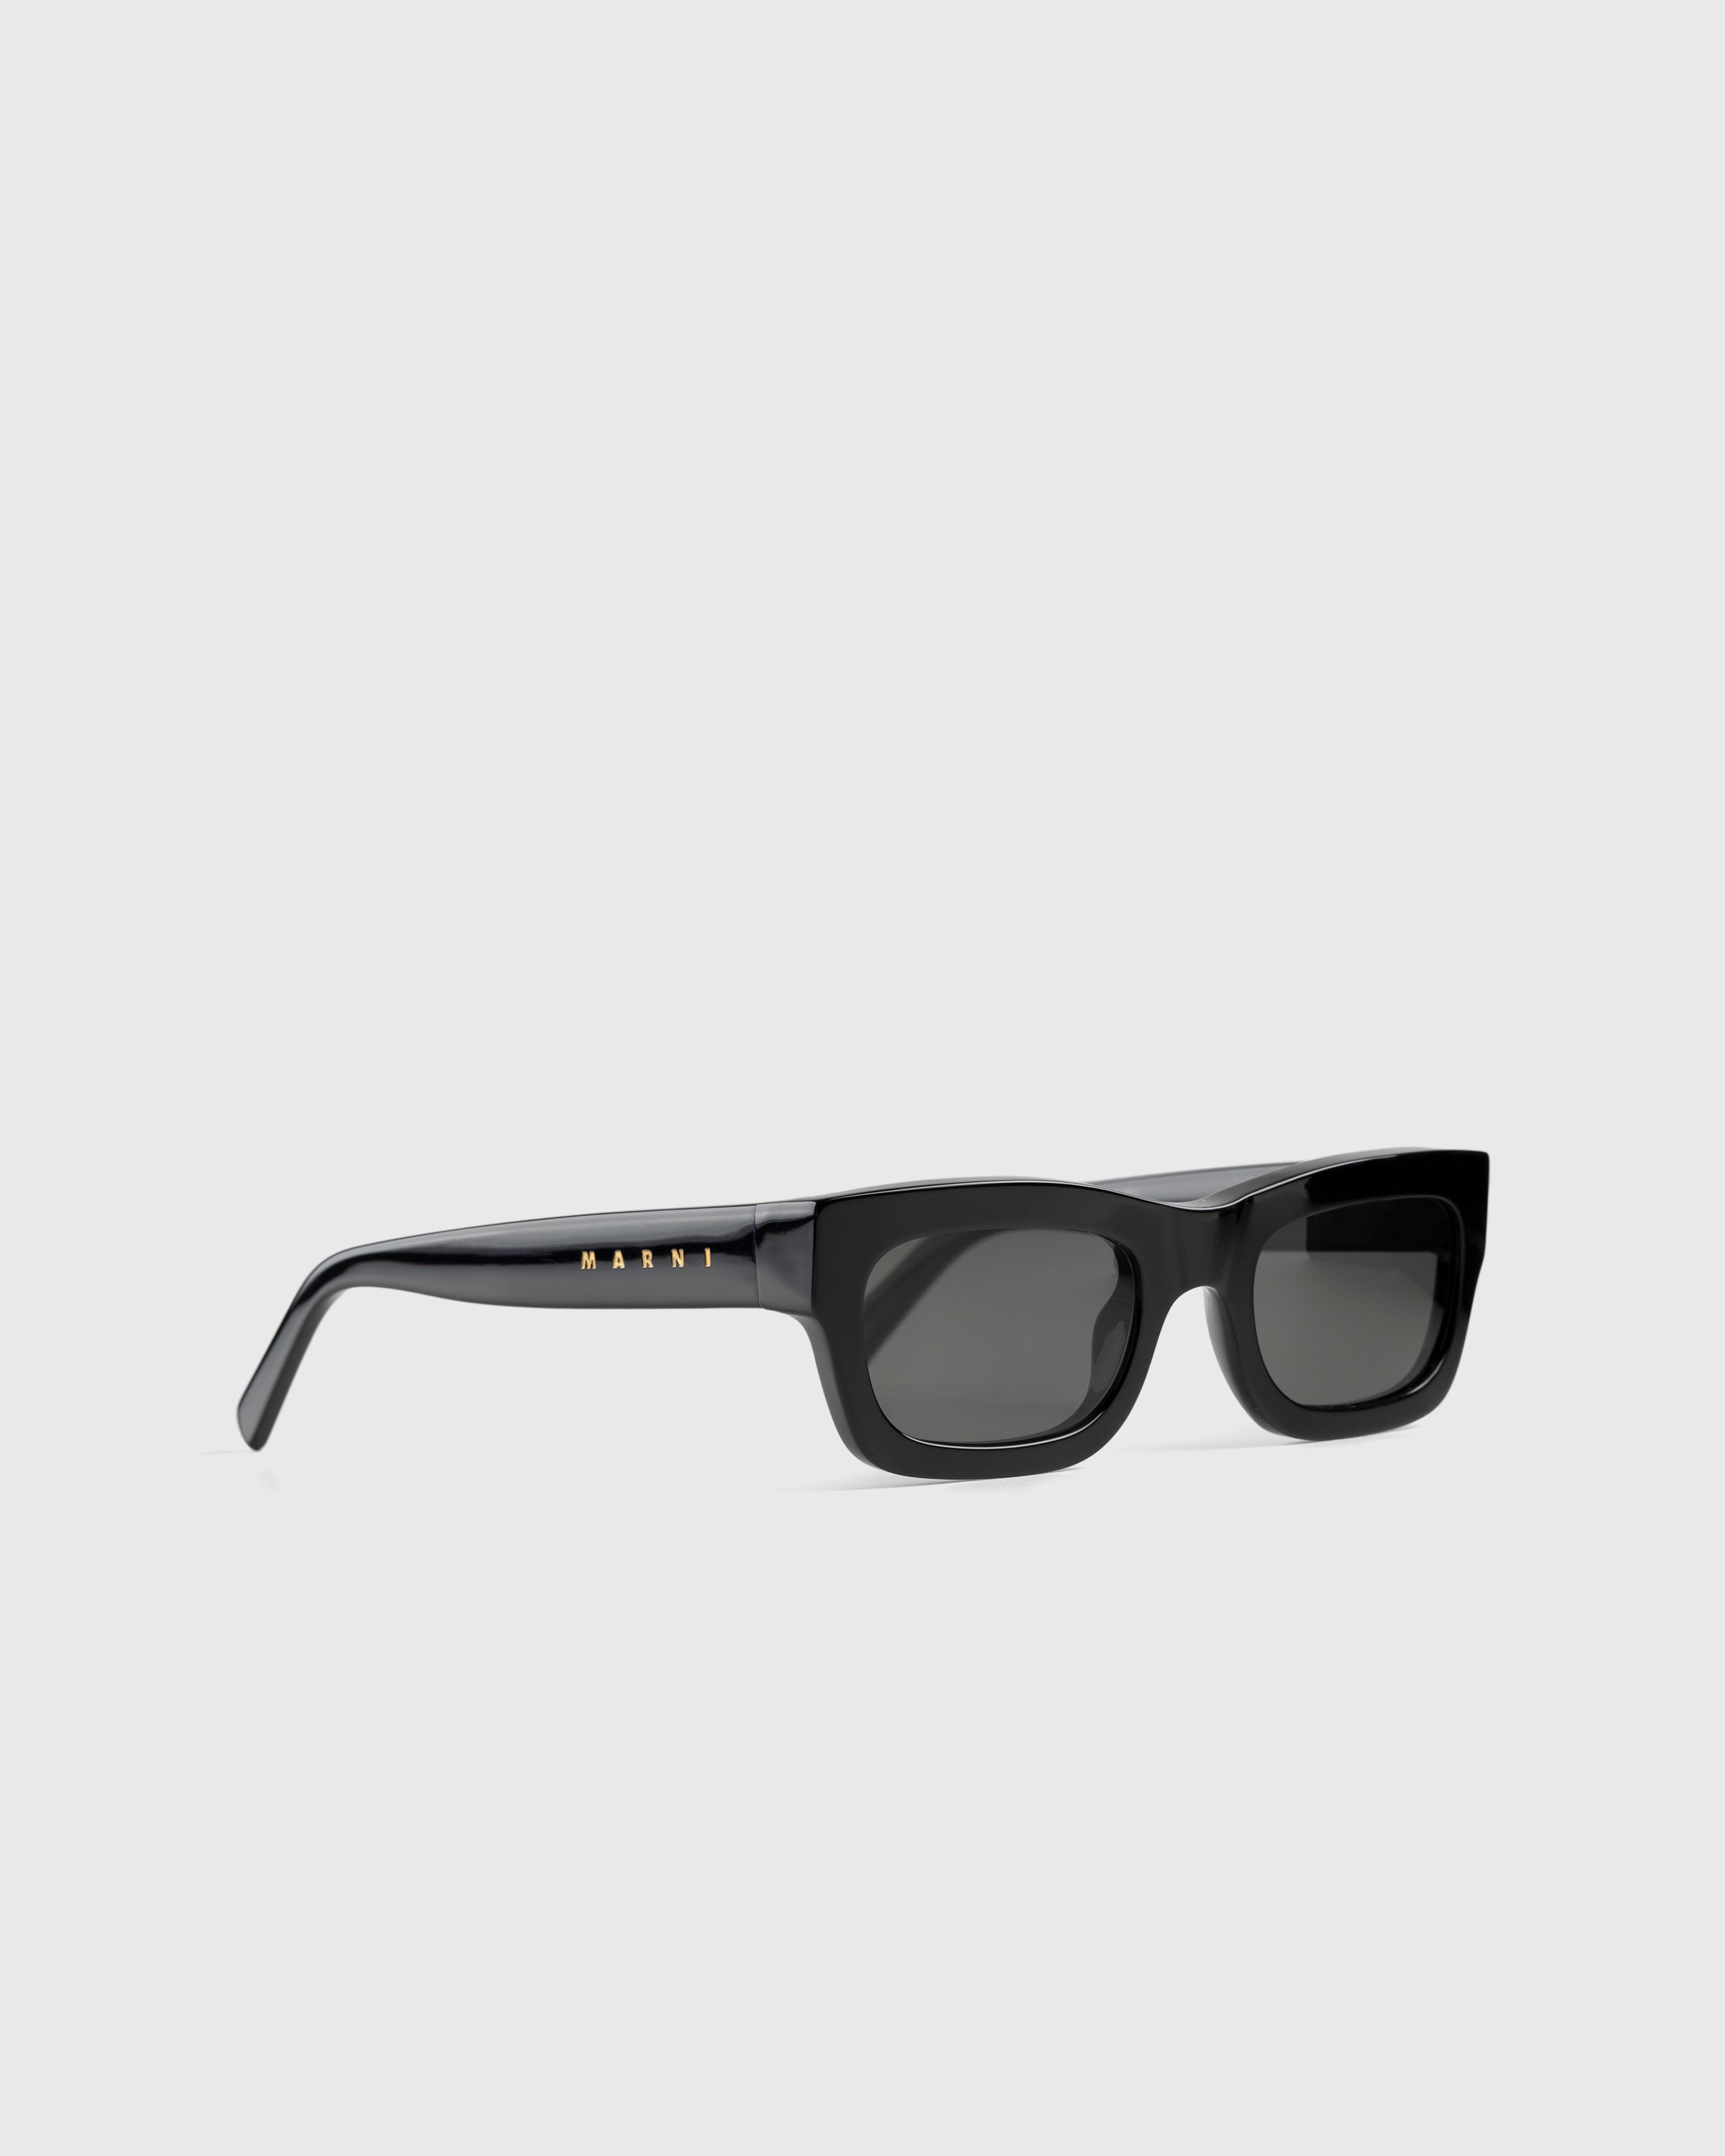 Marni - Kawasan Falls Sunglasses Black - Accessories - Black - Image 2